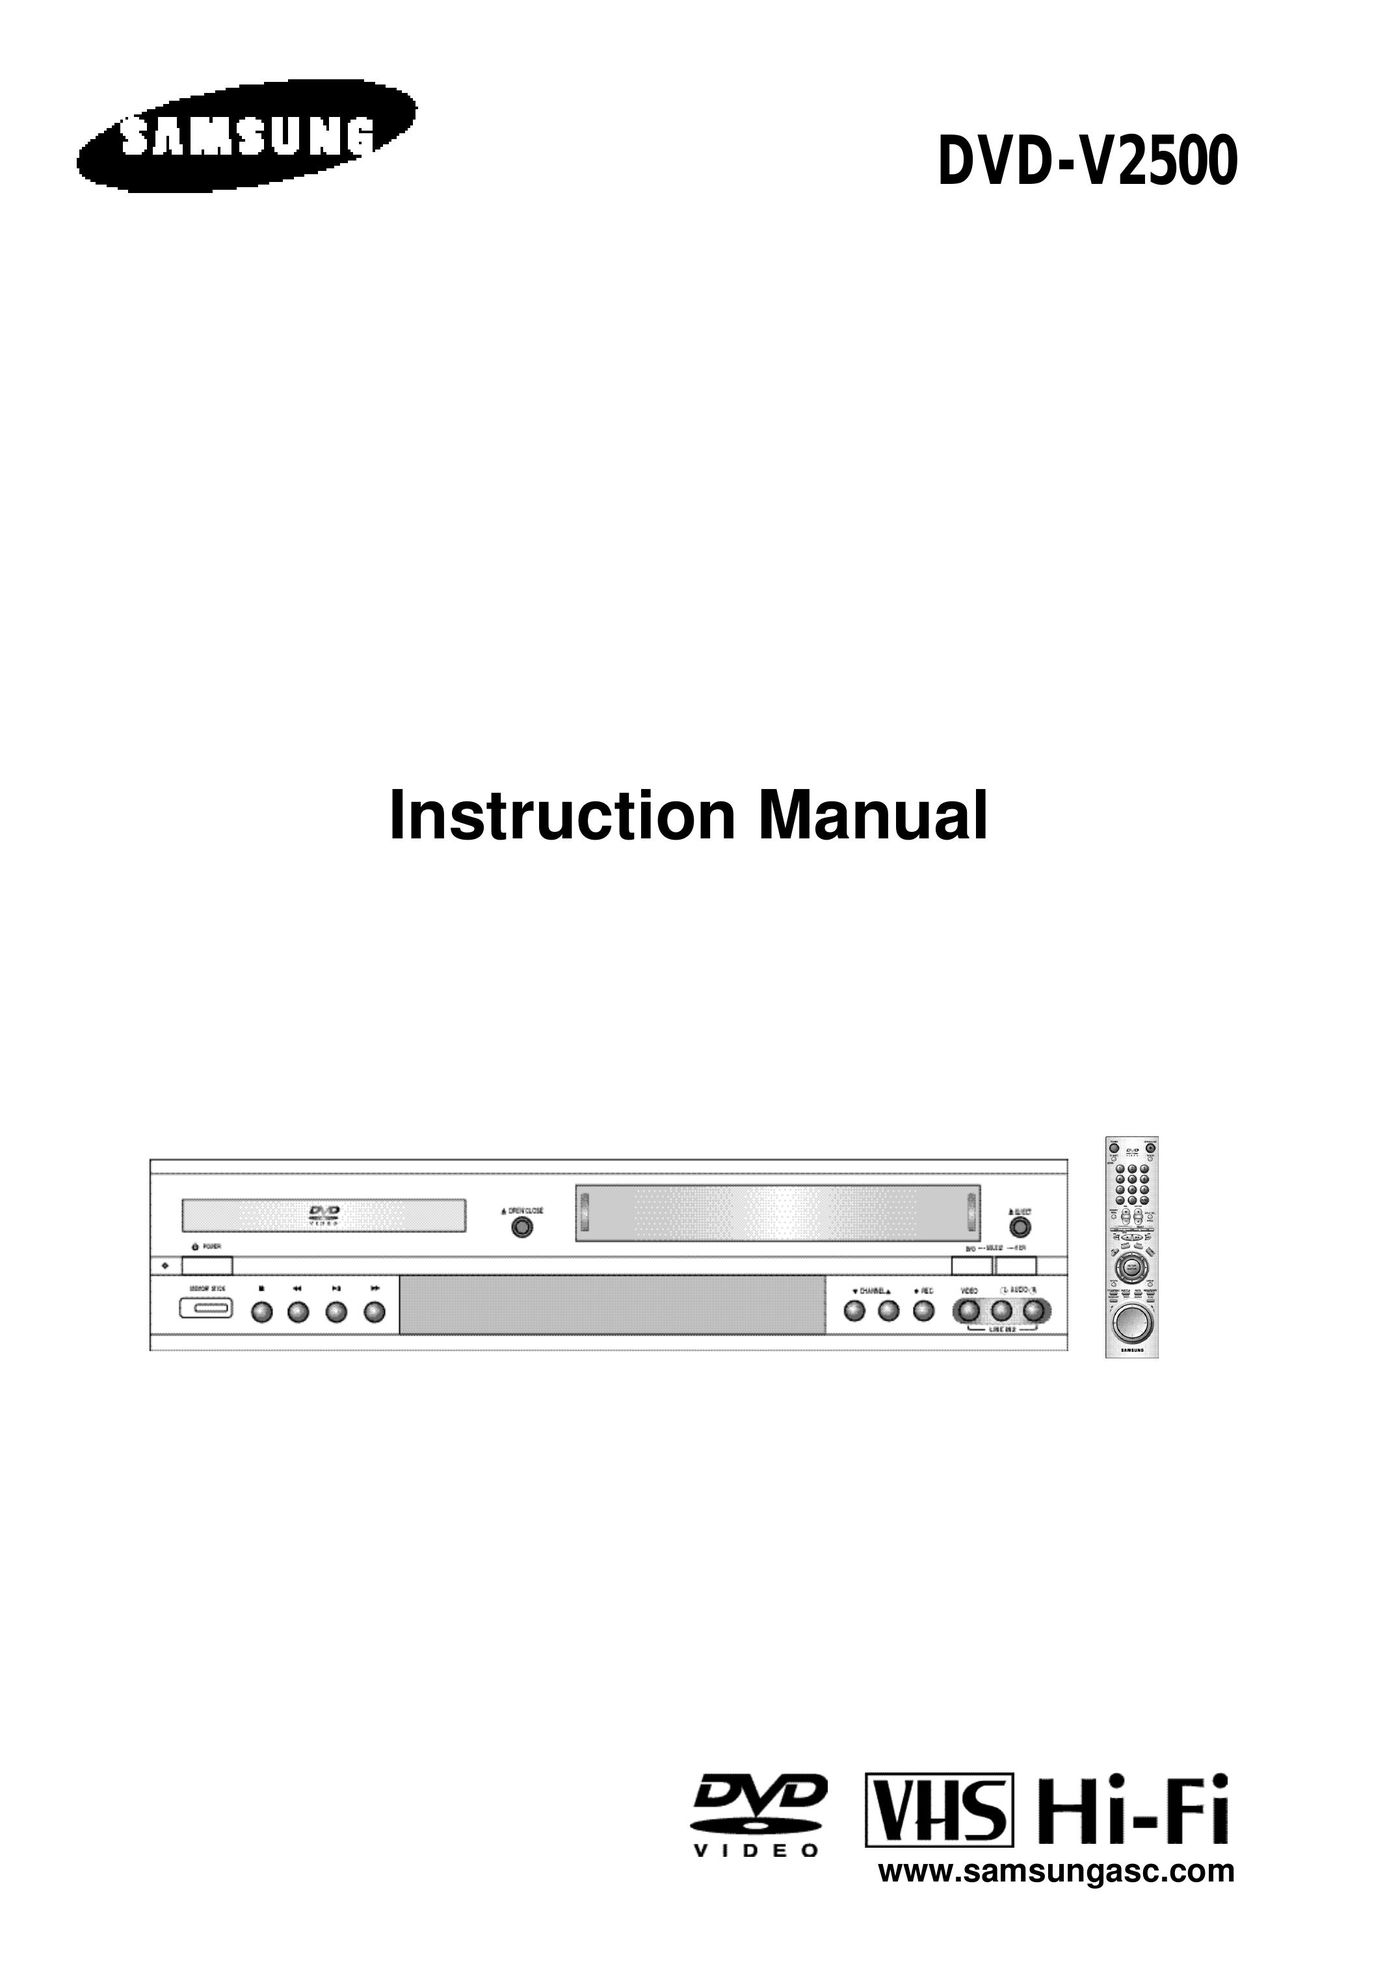 Samsung DVD-V2500 MP3 Player User Manual